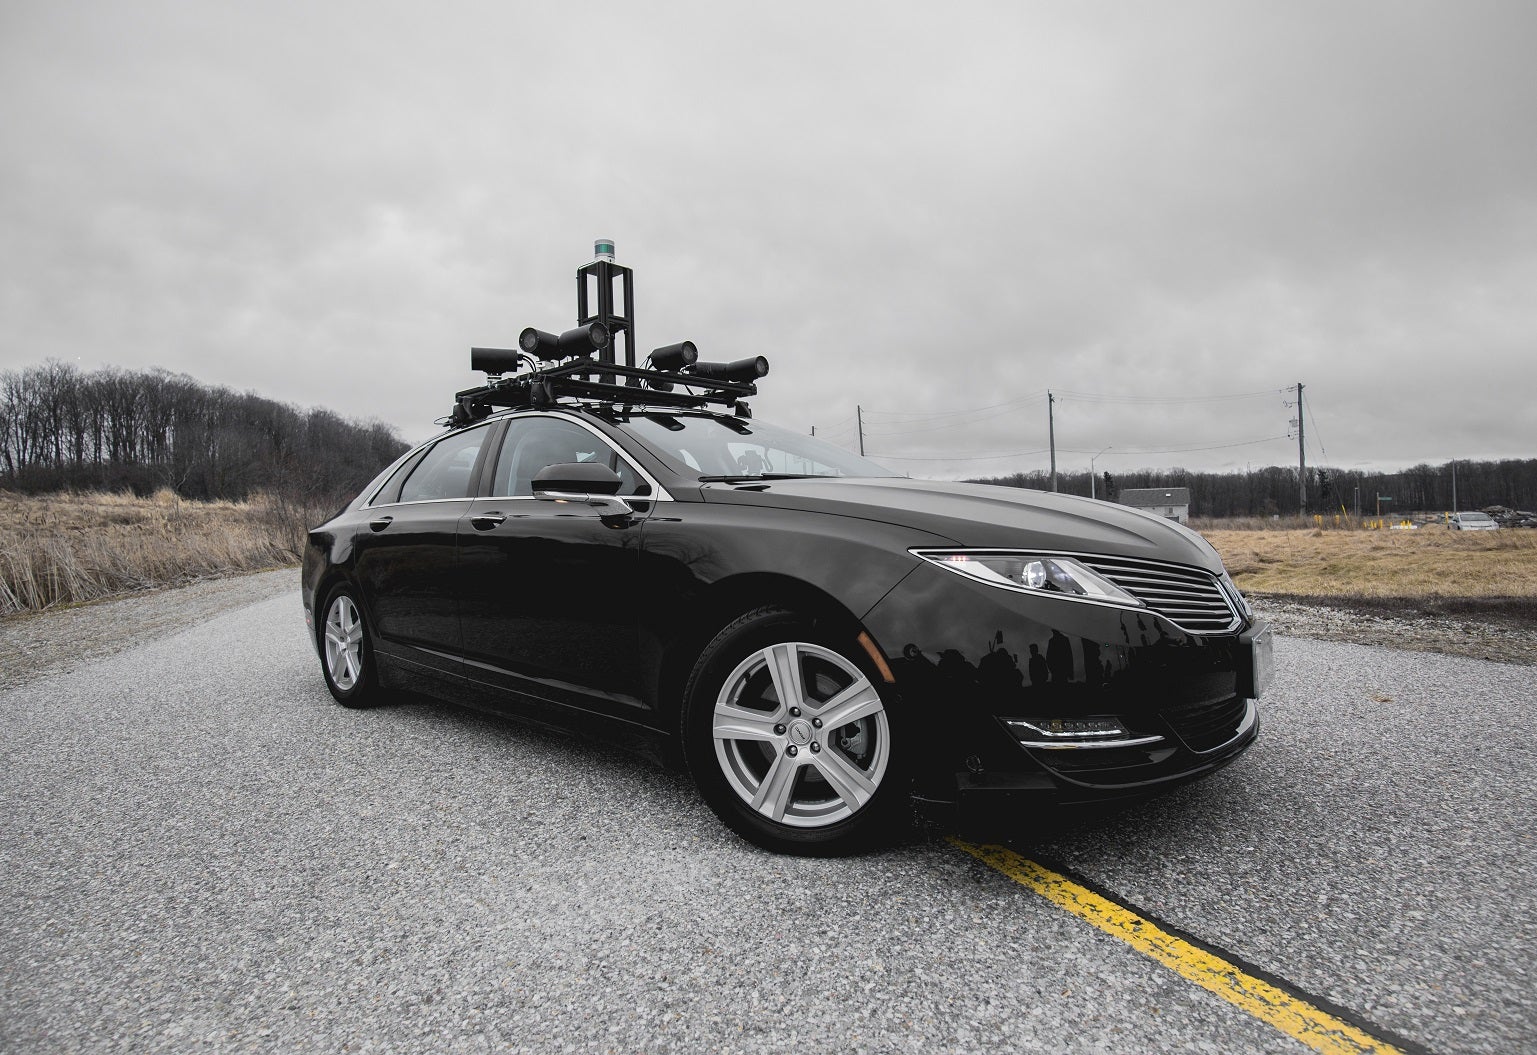 The Autonomoose self-driving car.